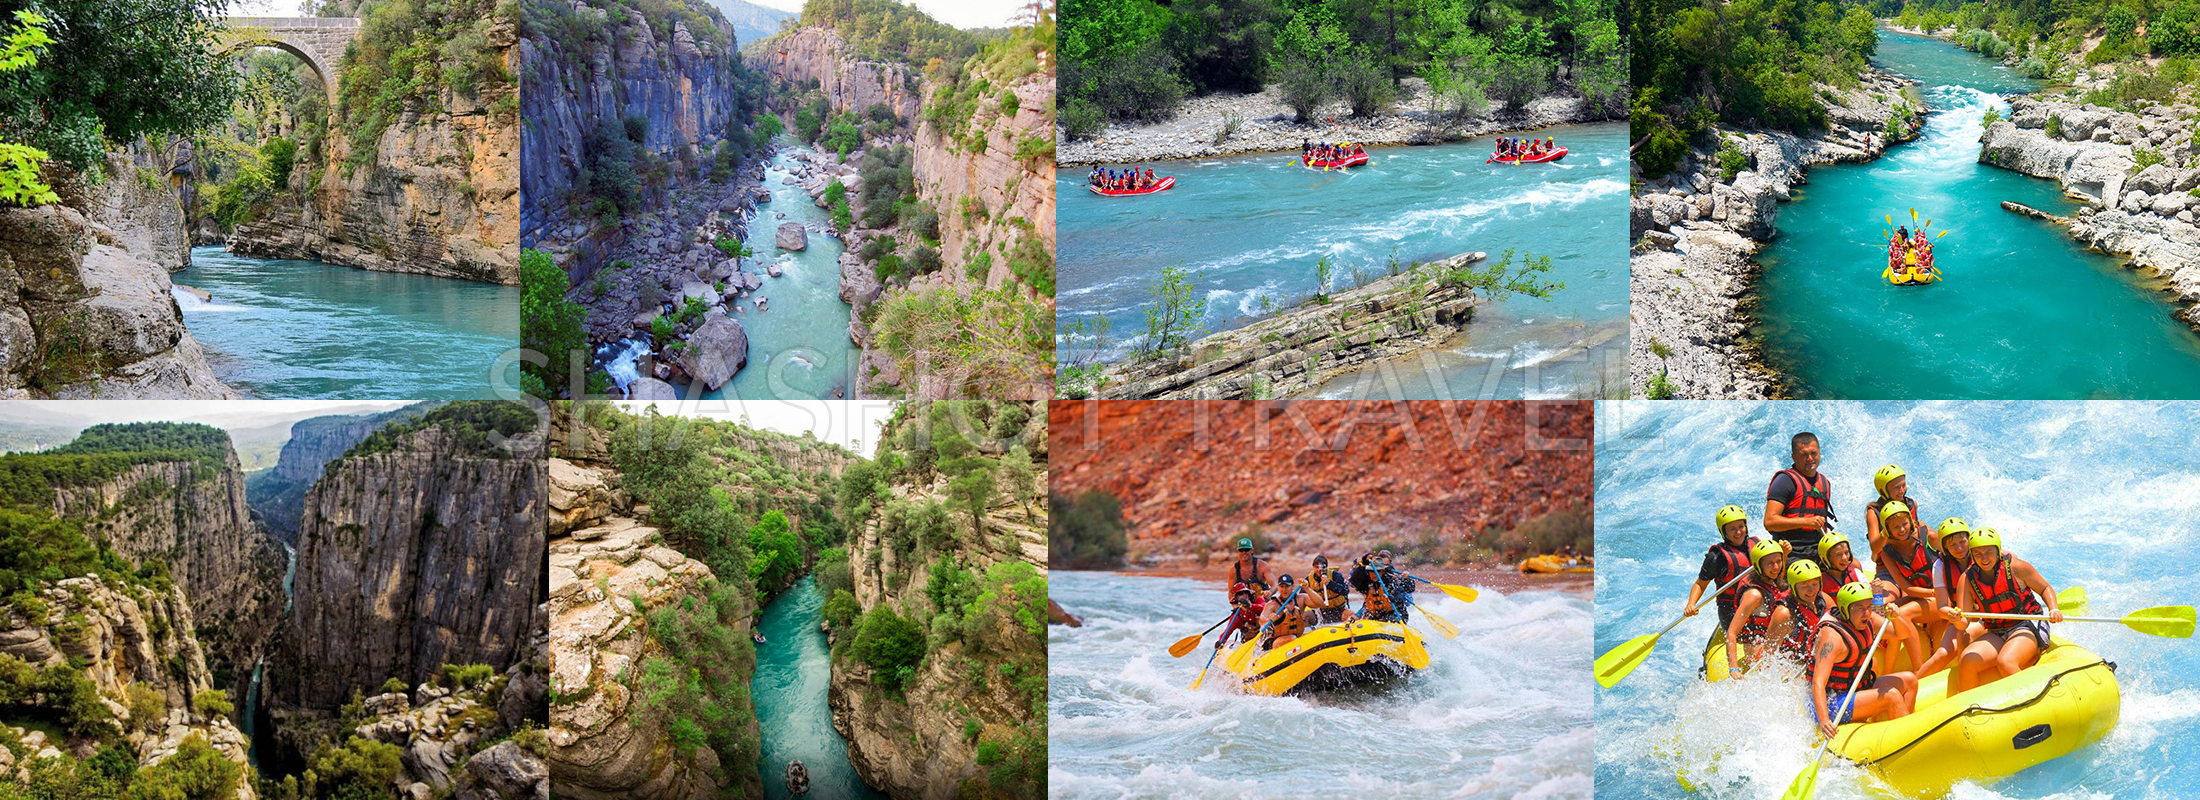 turkey-antalya-koprulu-canyon-rafting-daily